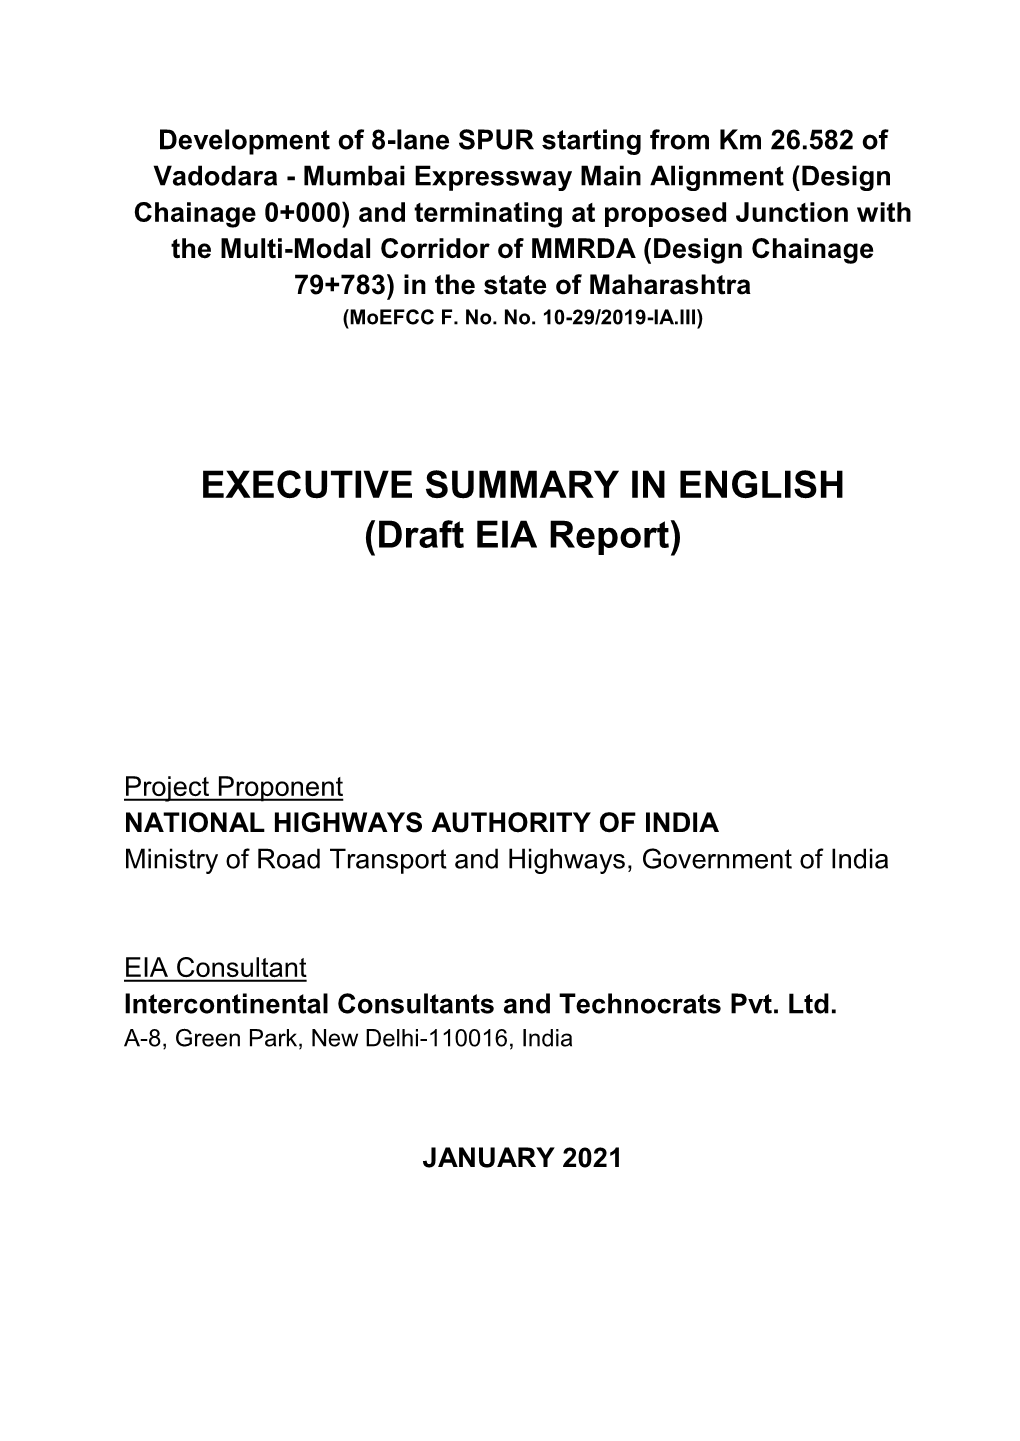 EXECUTIVE SUMMARY in ENGLISH (Draft EIA Report)